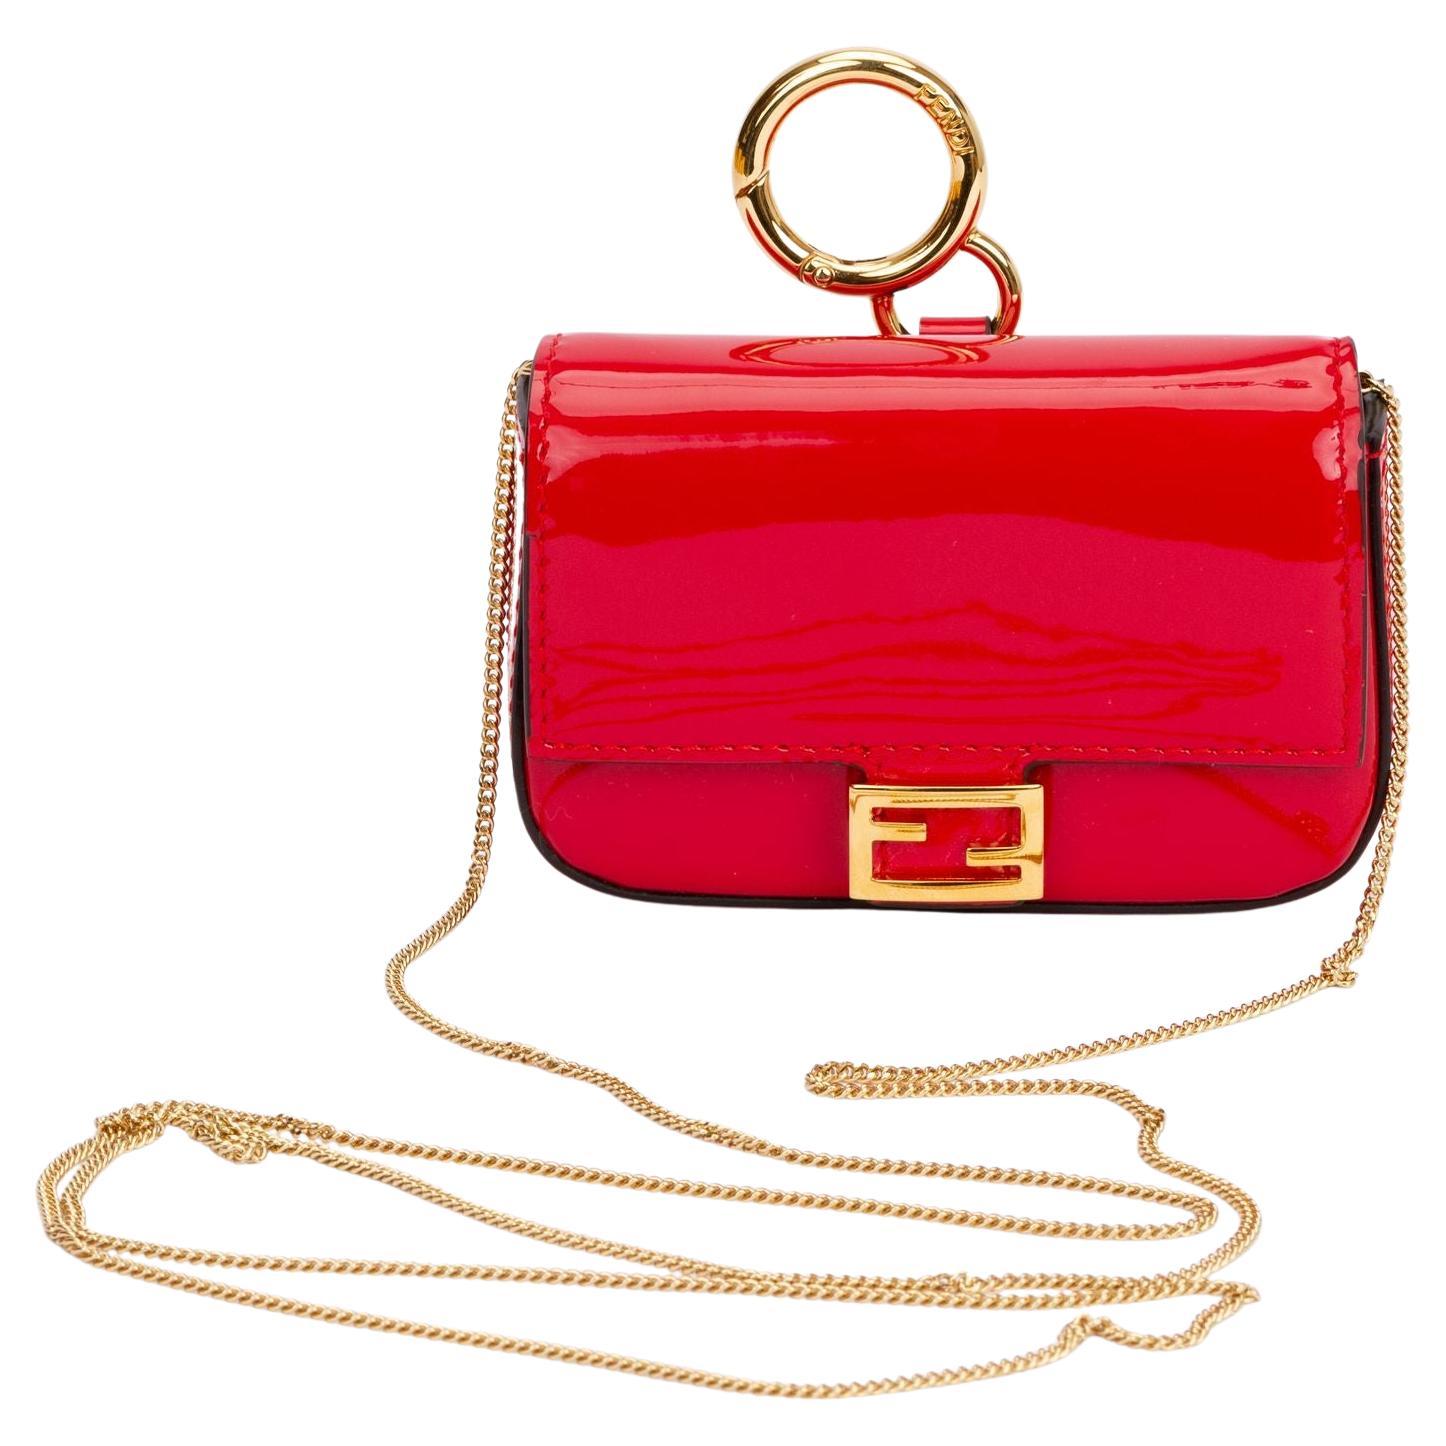 Fendi Baguette Nano Bag Charm Red For Sale At 1Stdibs | Fendi Nano Baguette  Charm Sale, Nano Purse, Fendi Baguette Bag Charm